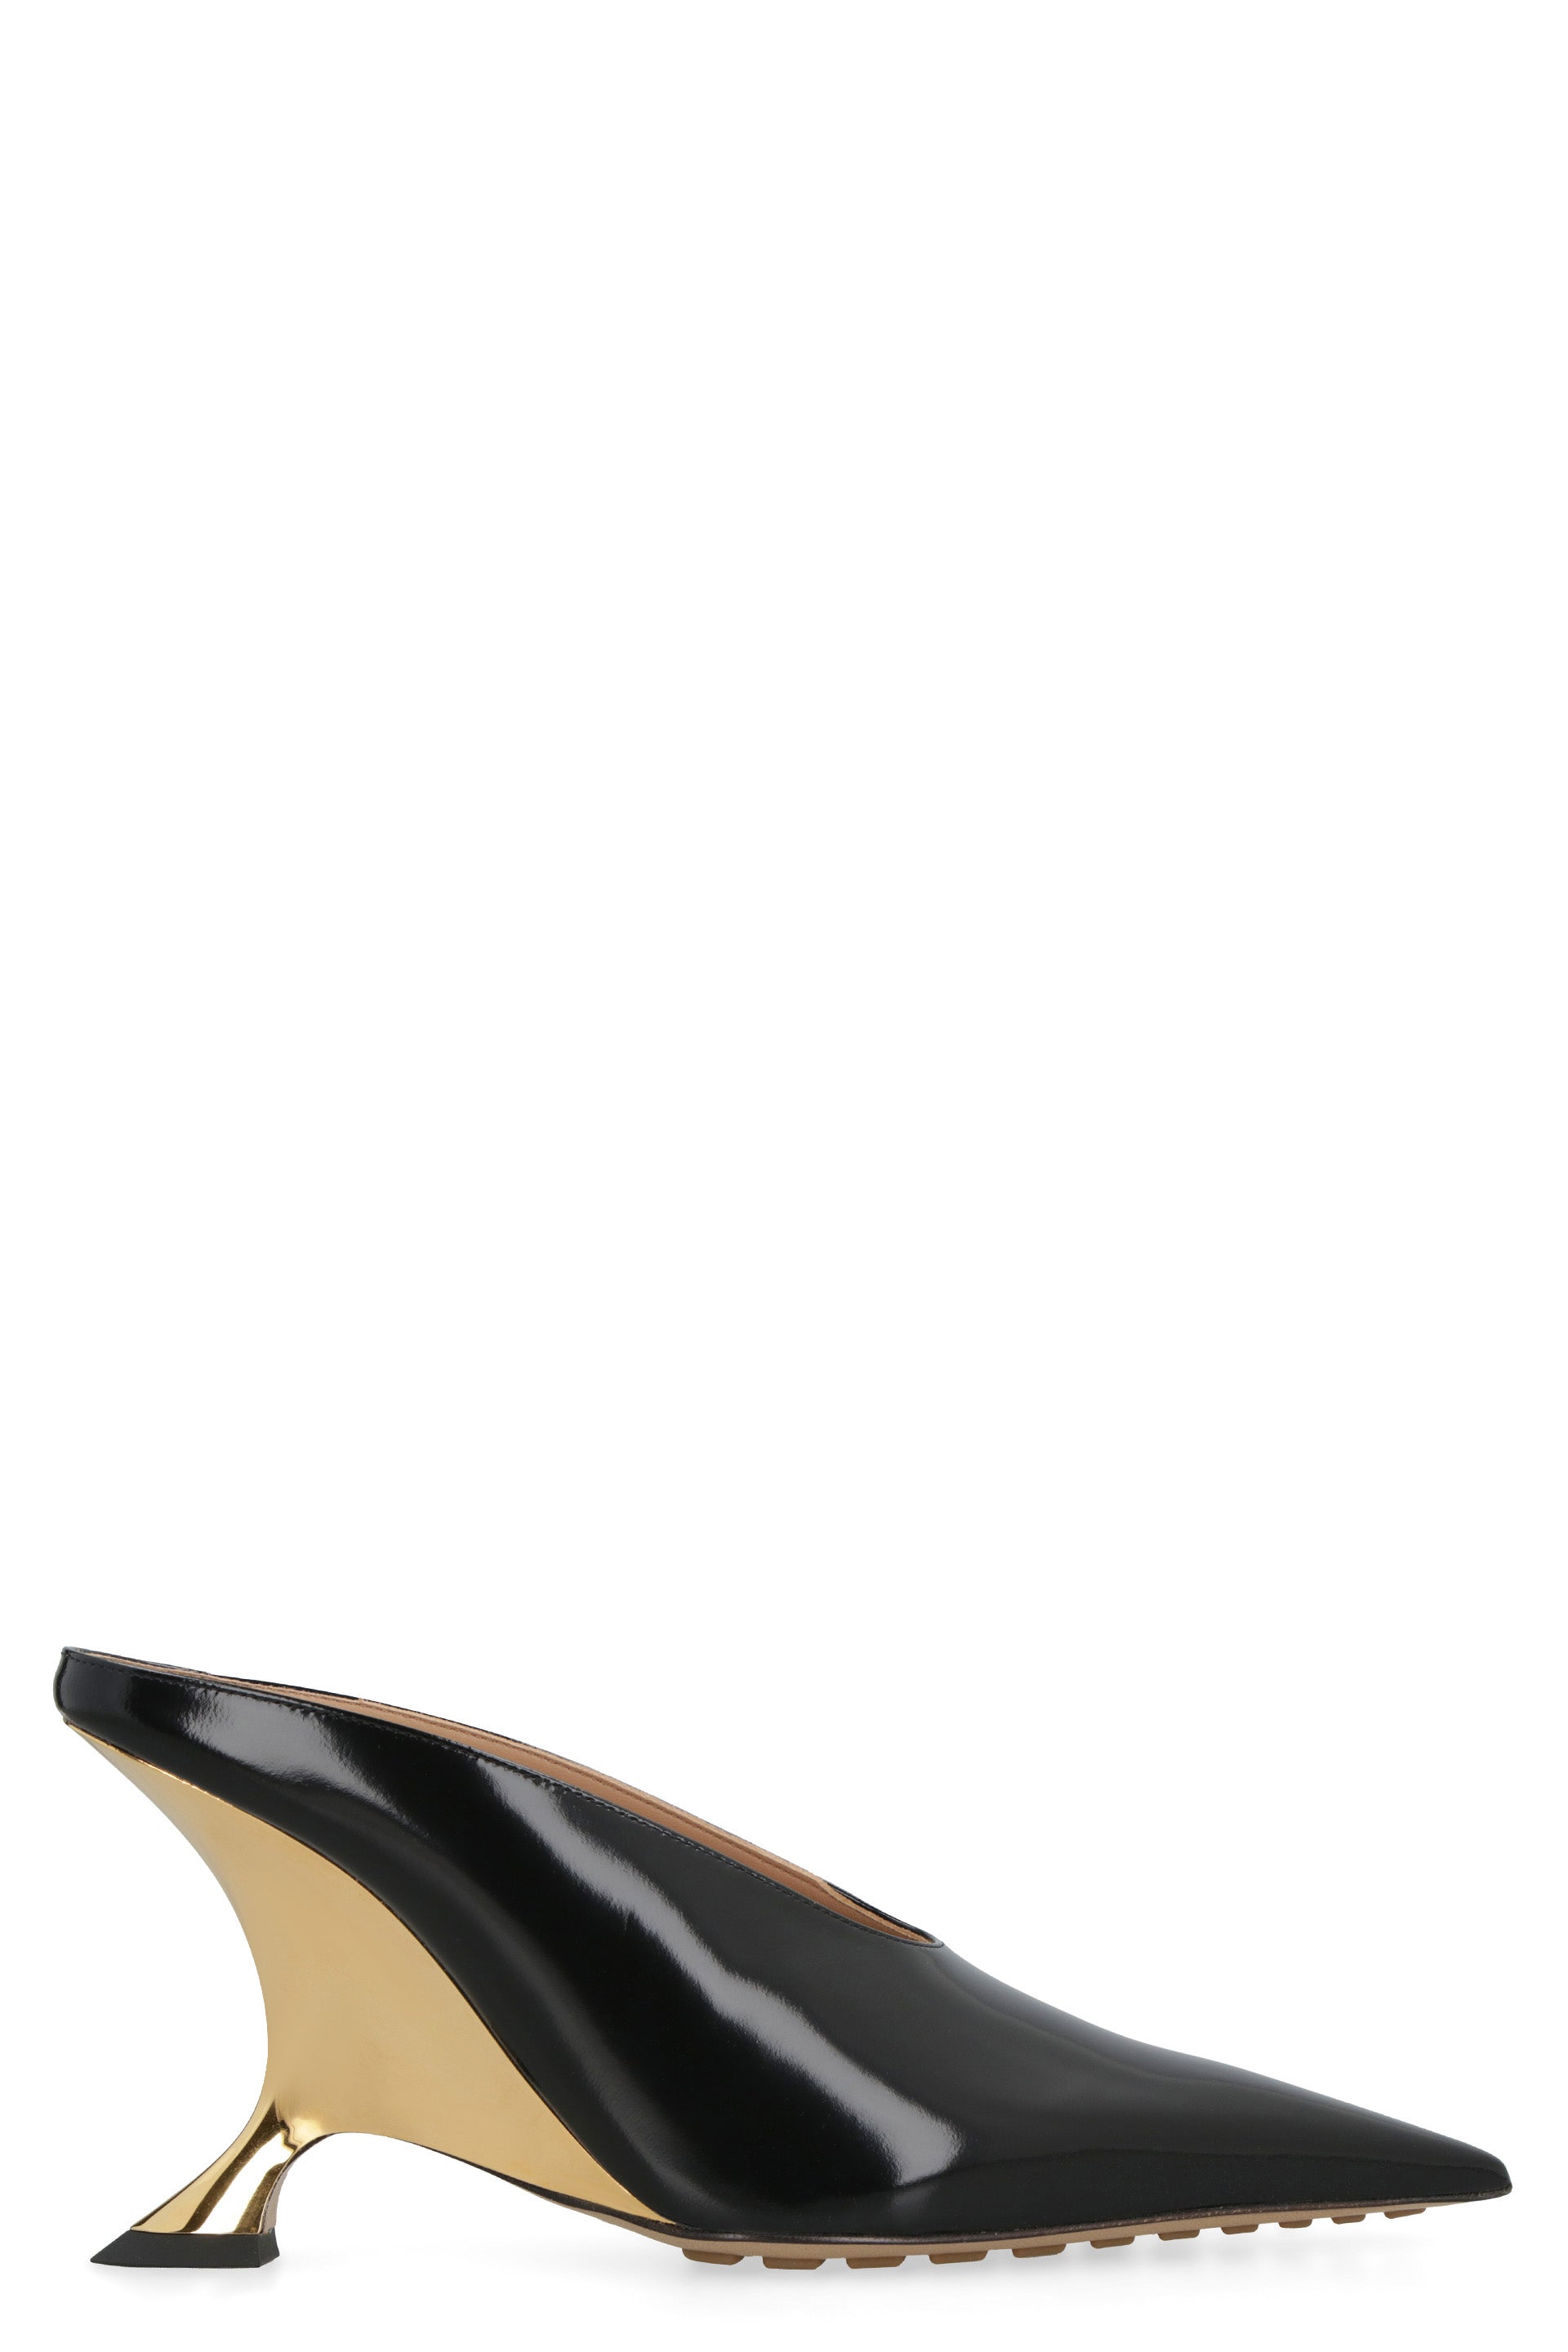 Shop Bottega Veneta Black Pointy Toe Leather Sandals With Mirror Effect Block Heel For Women